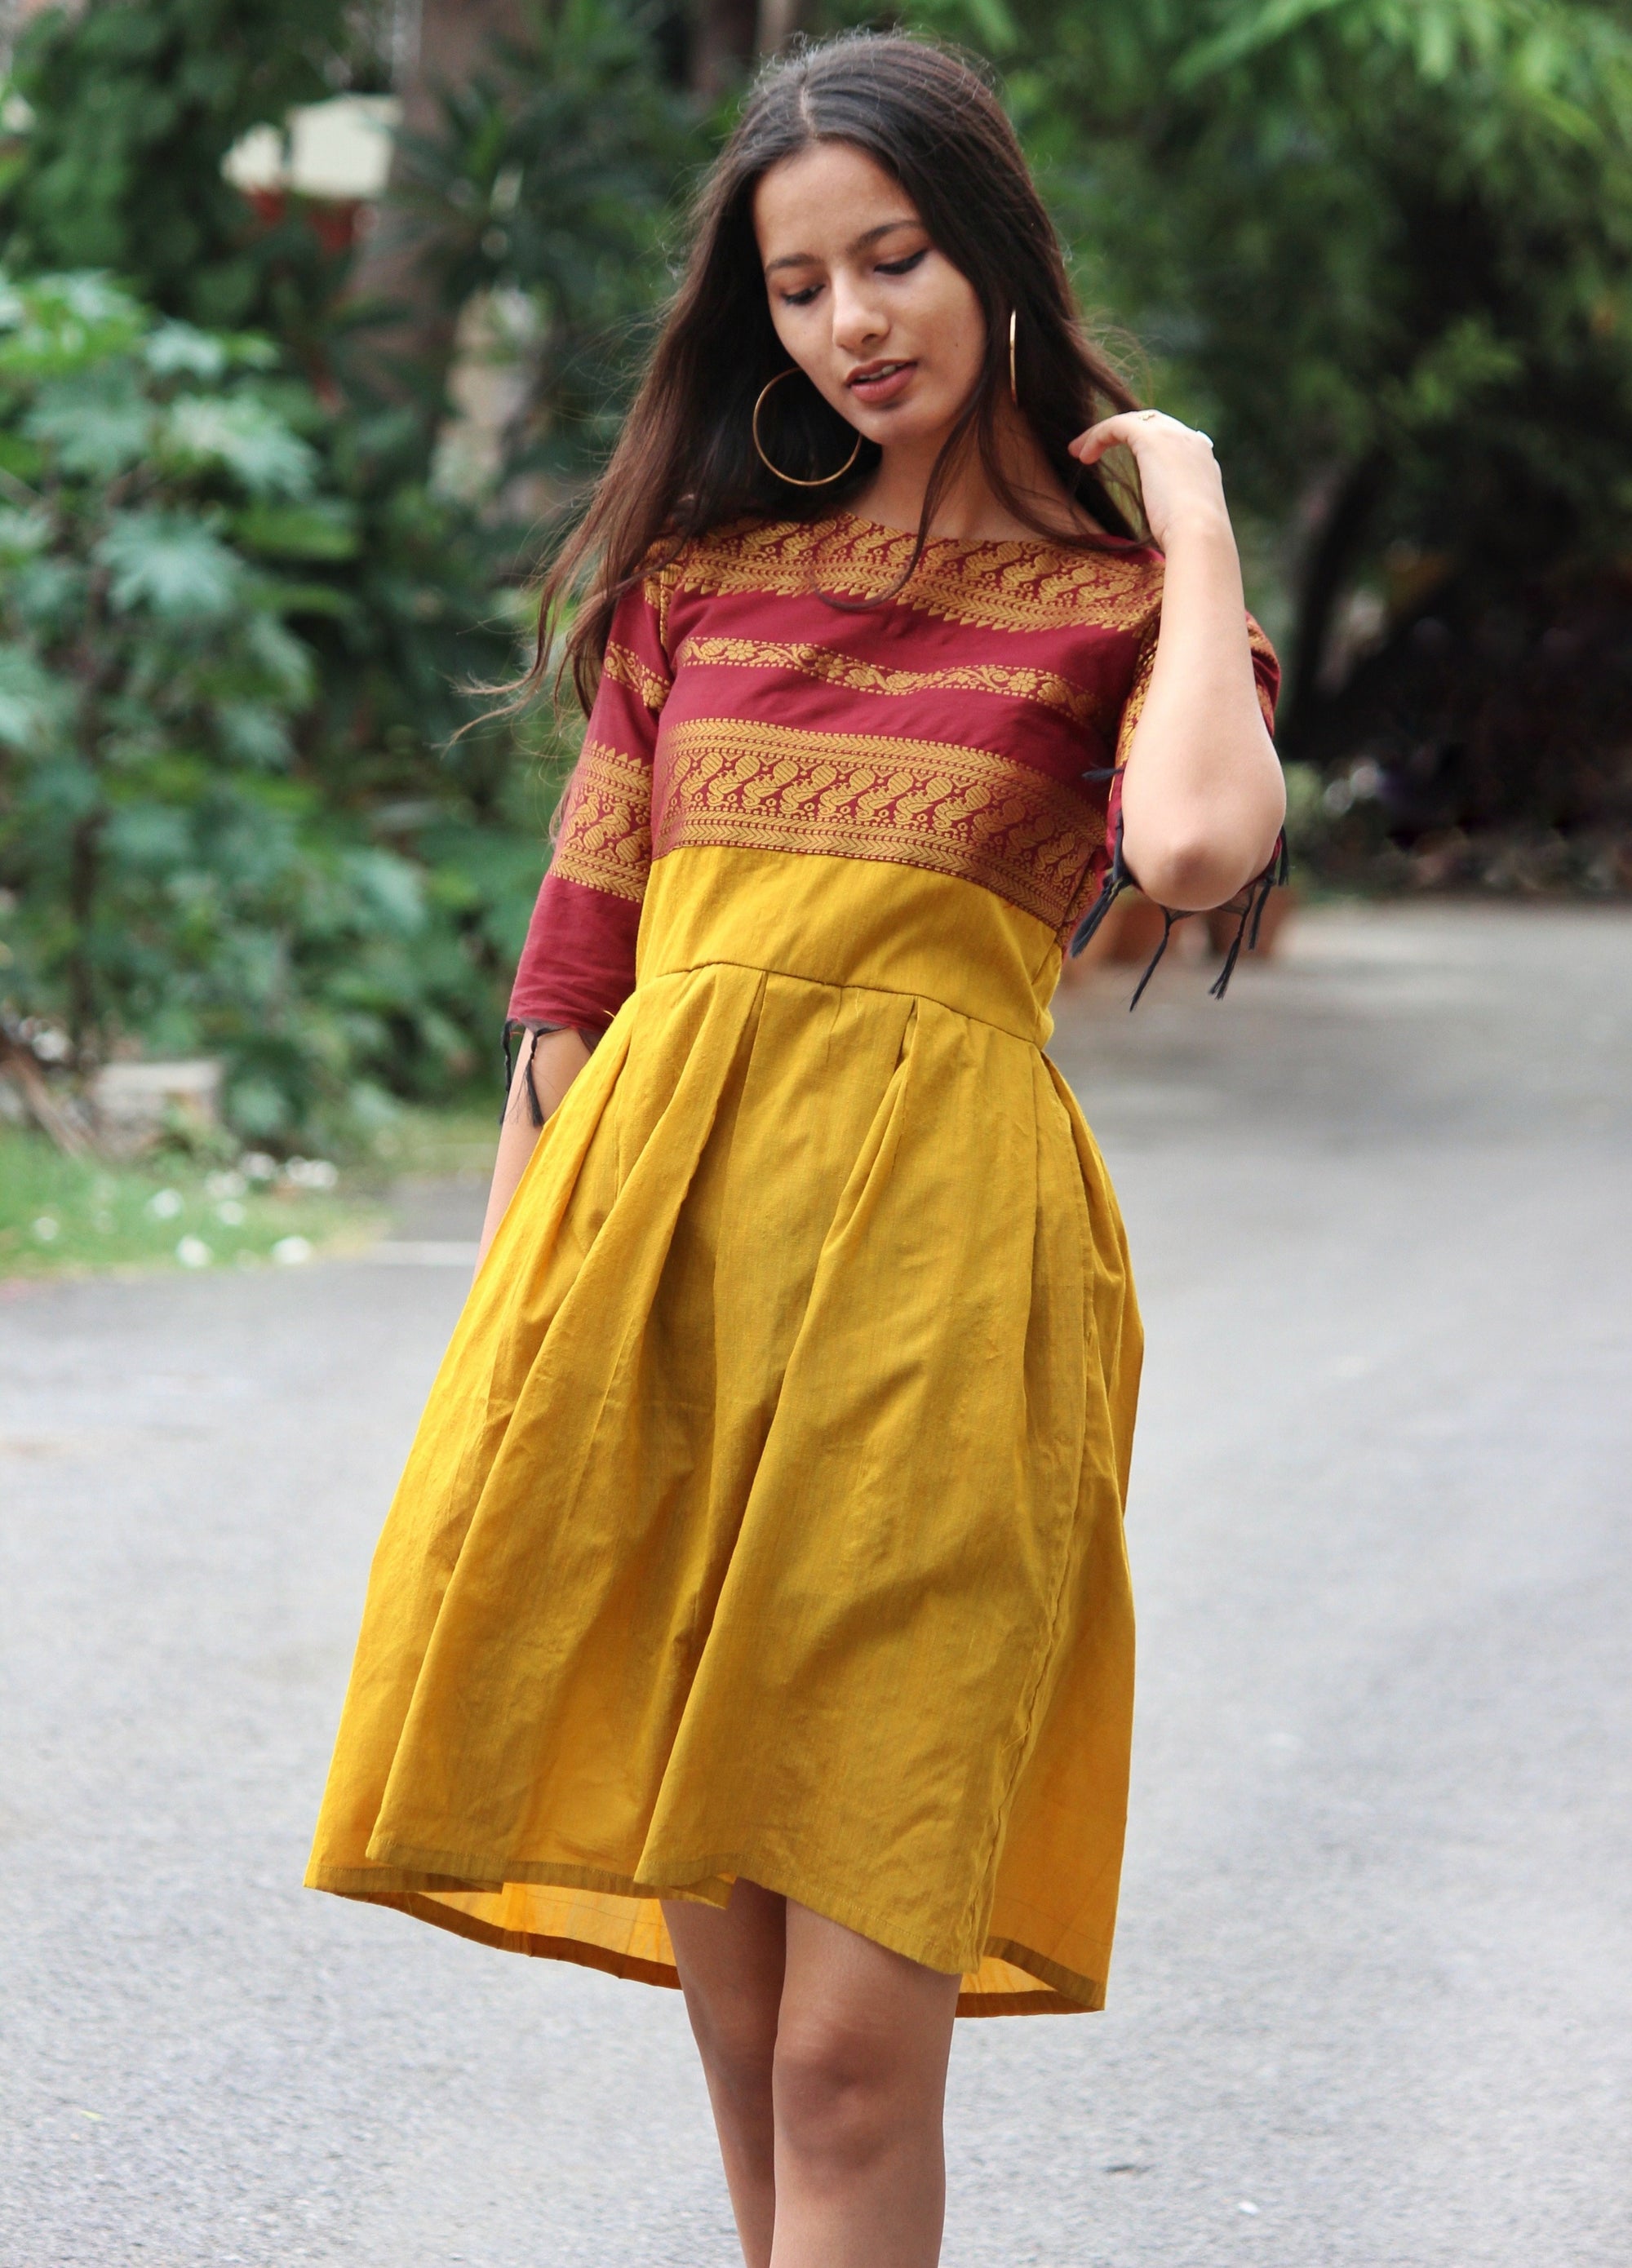 Pragya Jaiswal in a red saree gown for “Akhanda” promotions! |  Fashionworldhub